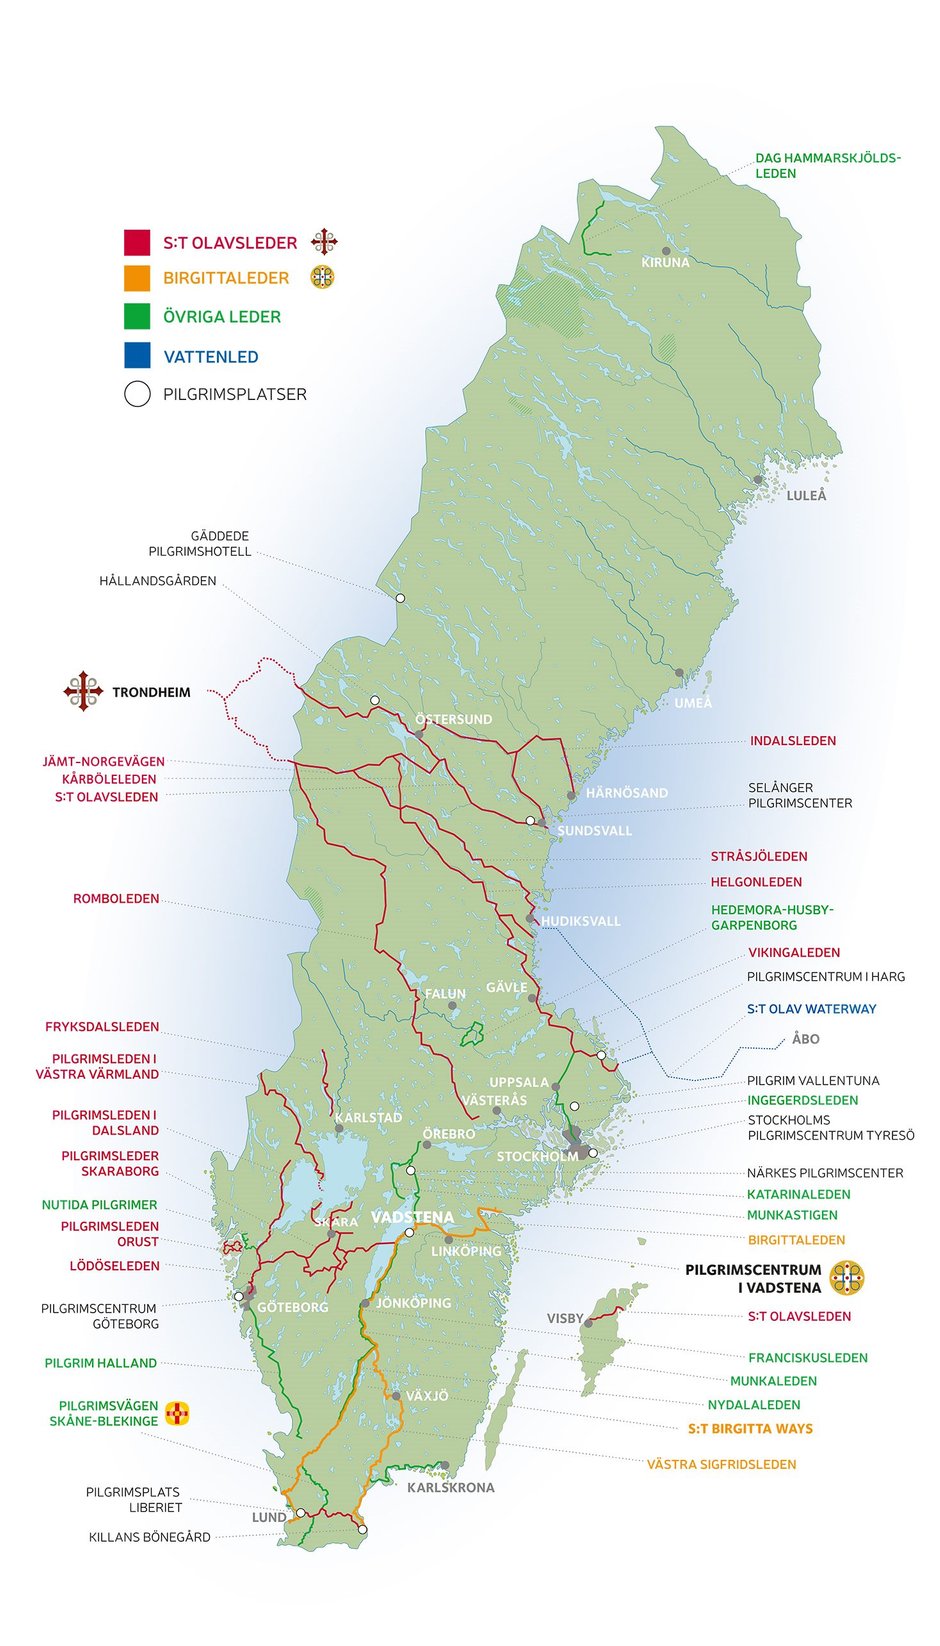 Sverigekarta med utritade pilgrimsleder.